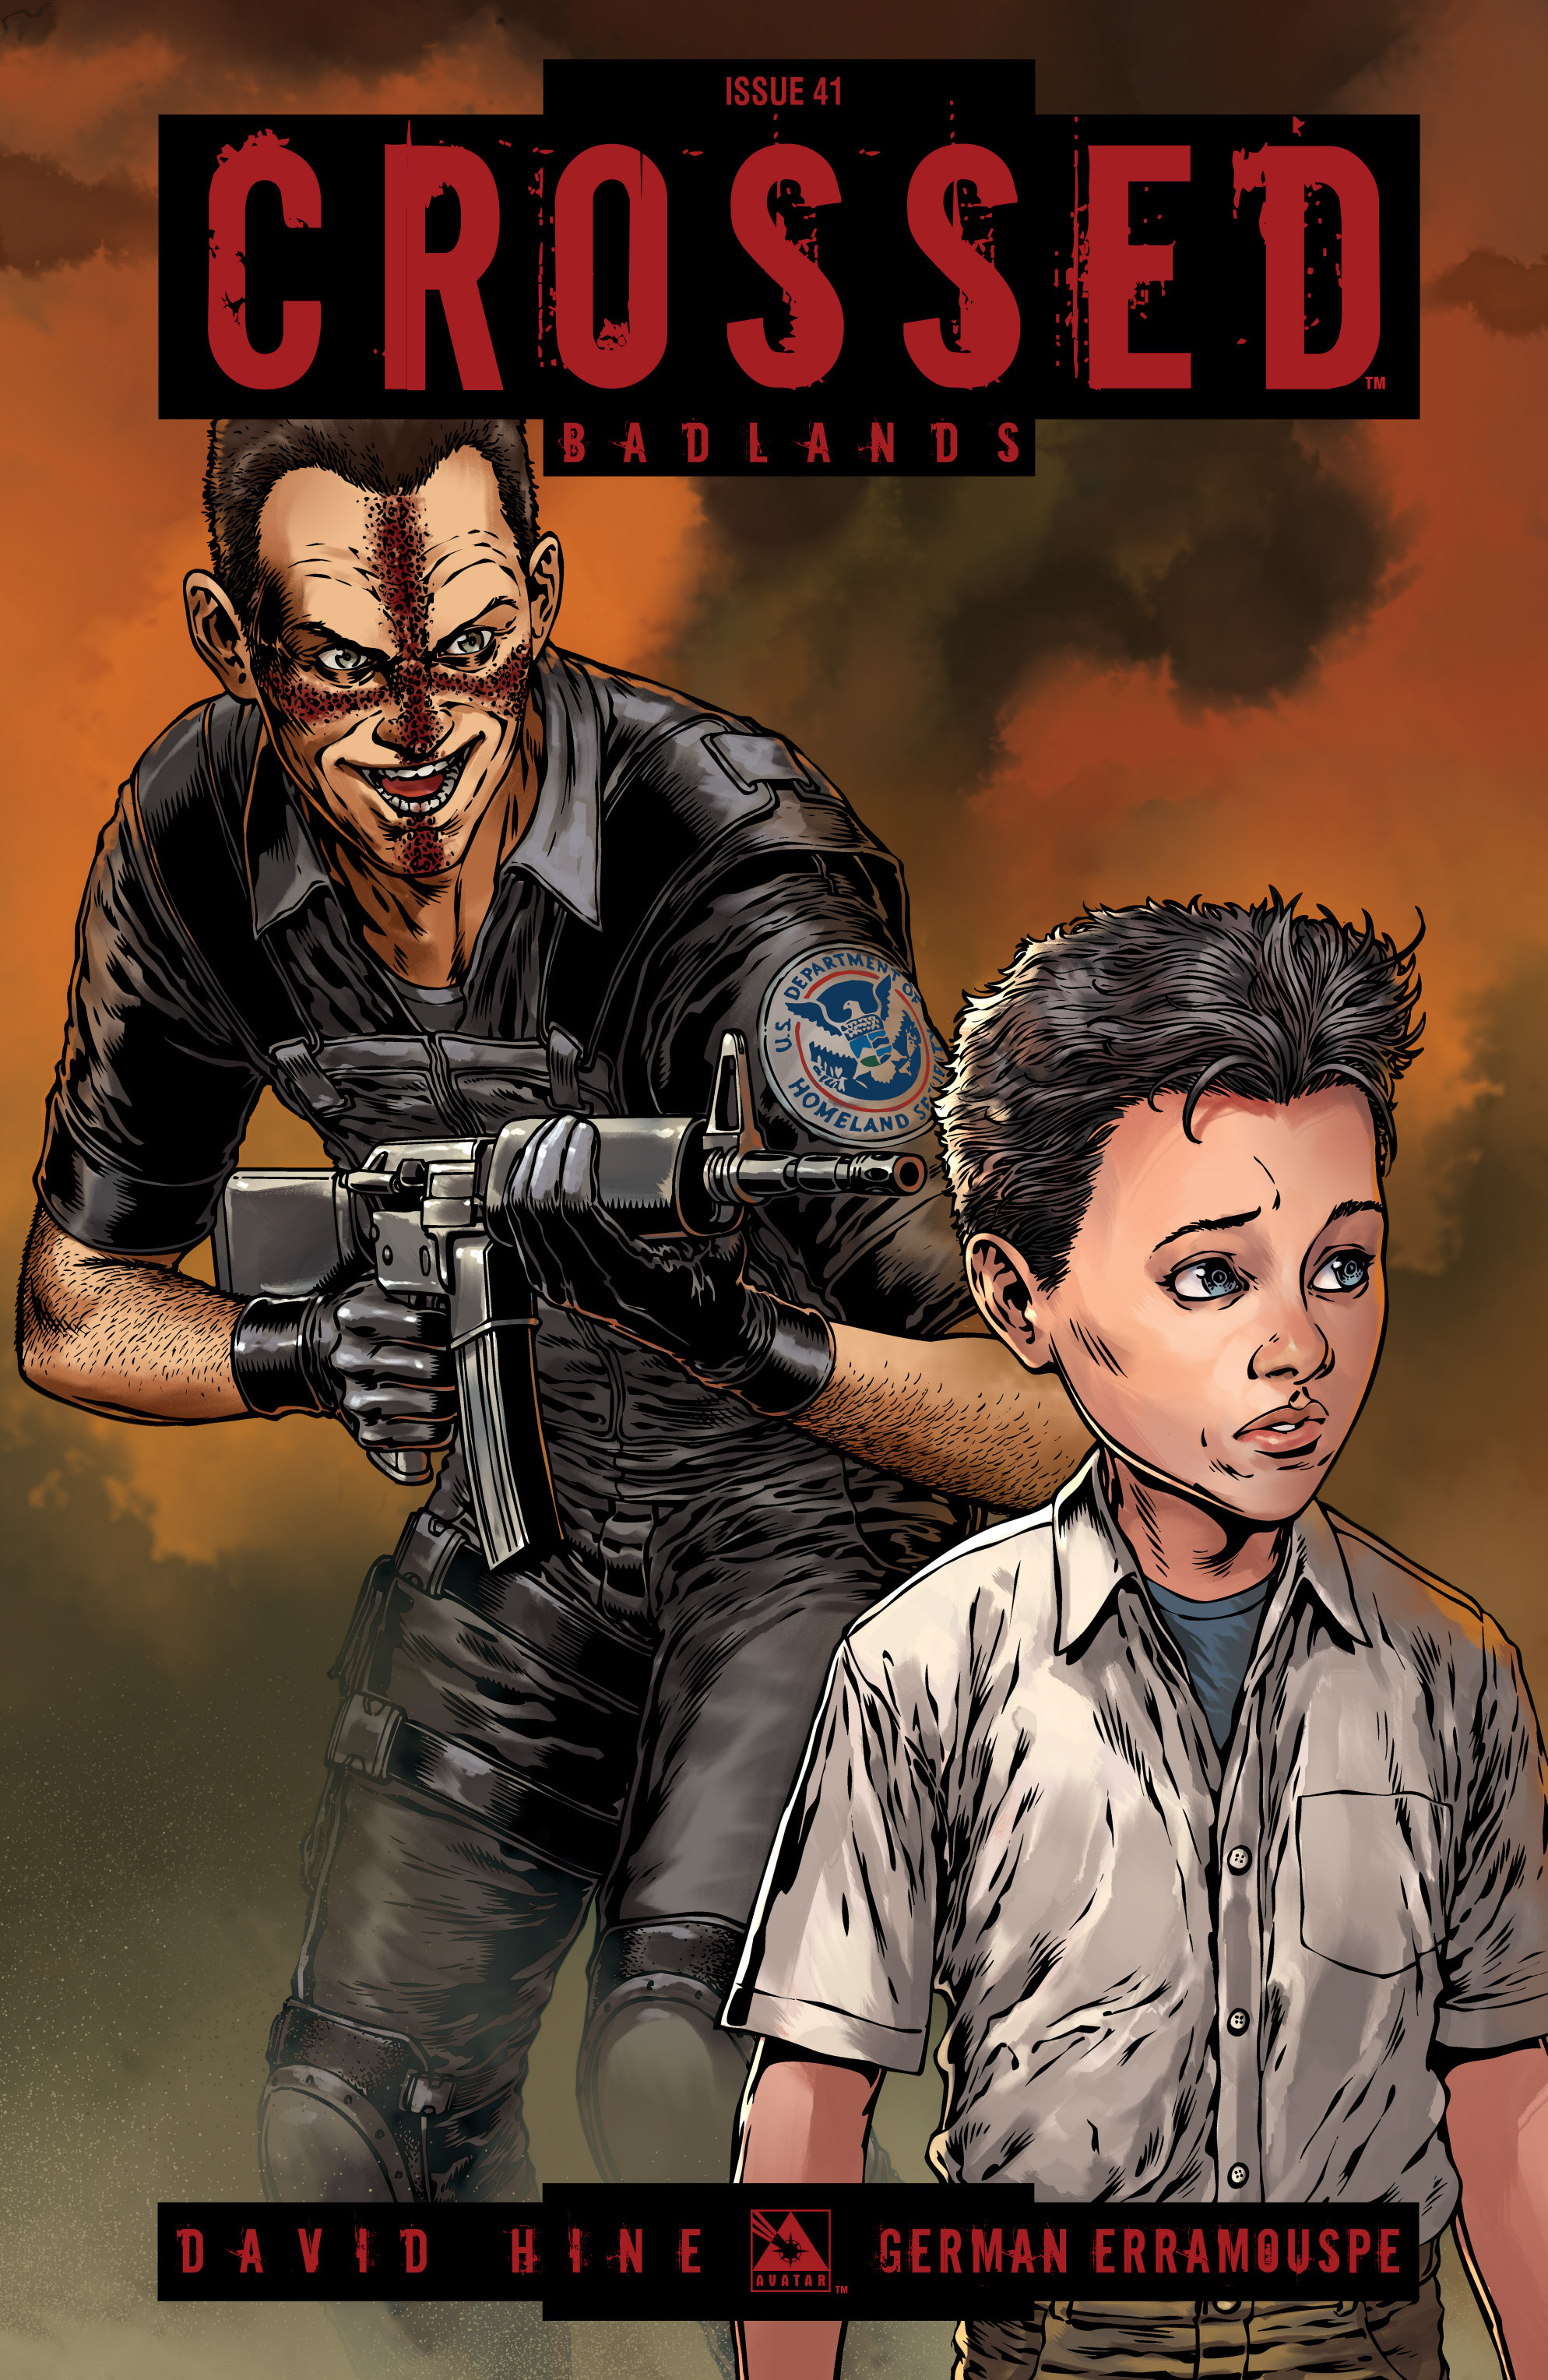 Read online Crossed: Badlands comic -  Issue #41 - 1